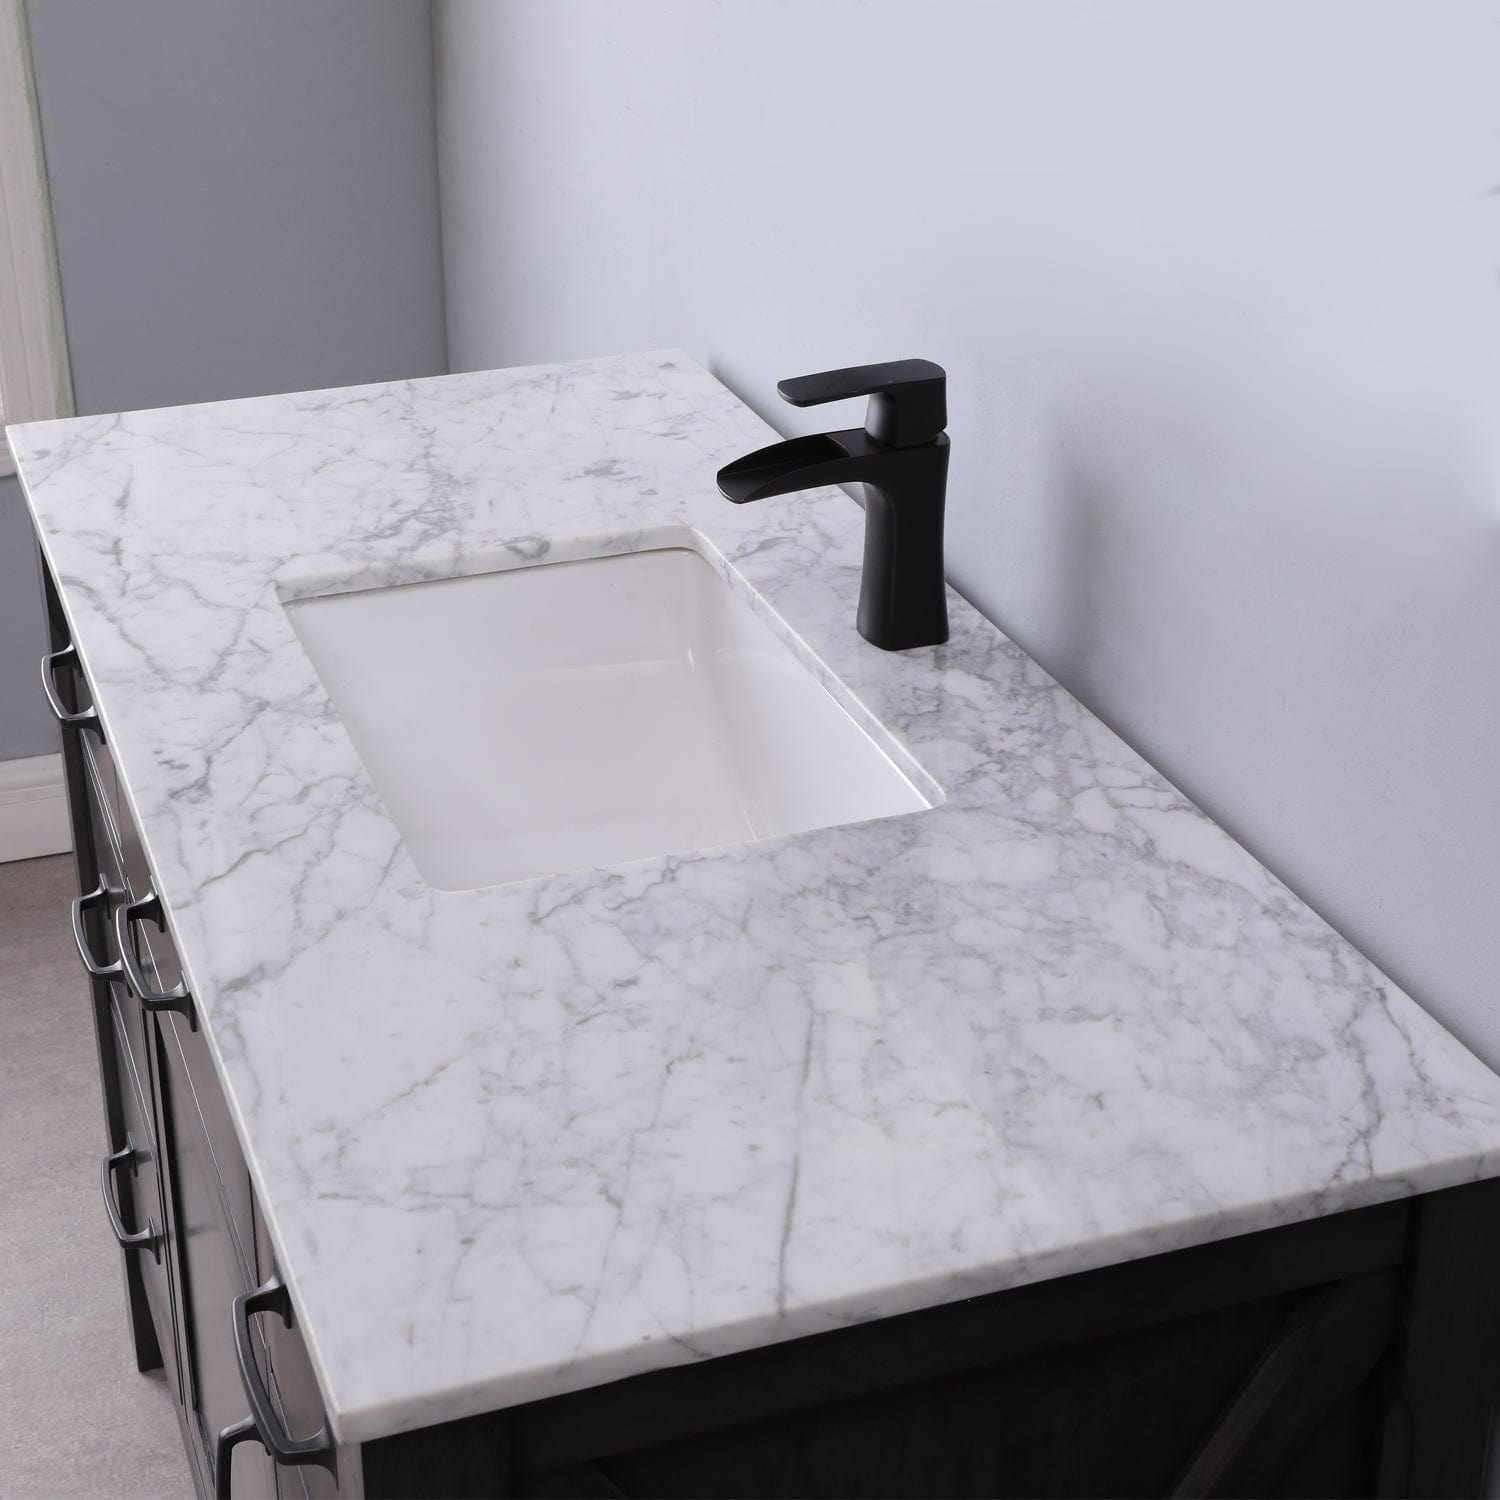 Altair Maribella 48" Single Bathroom Vanity Set in Rust Black and Carrara White Marble Countertop without Mirror 535048-RL-CA-NM - Molaix631112970327Vanity535048-RL-CA-NM